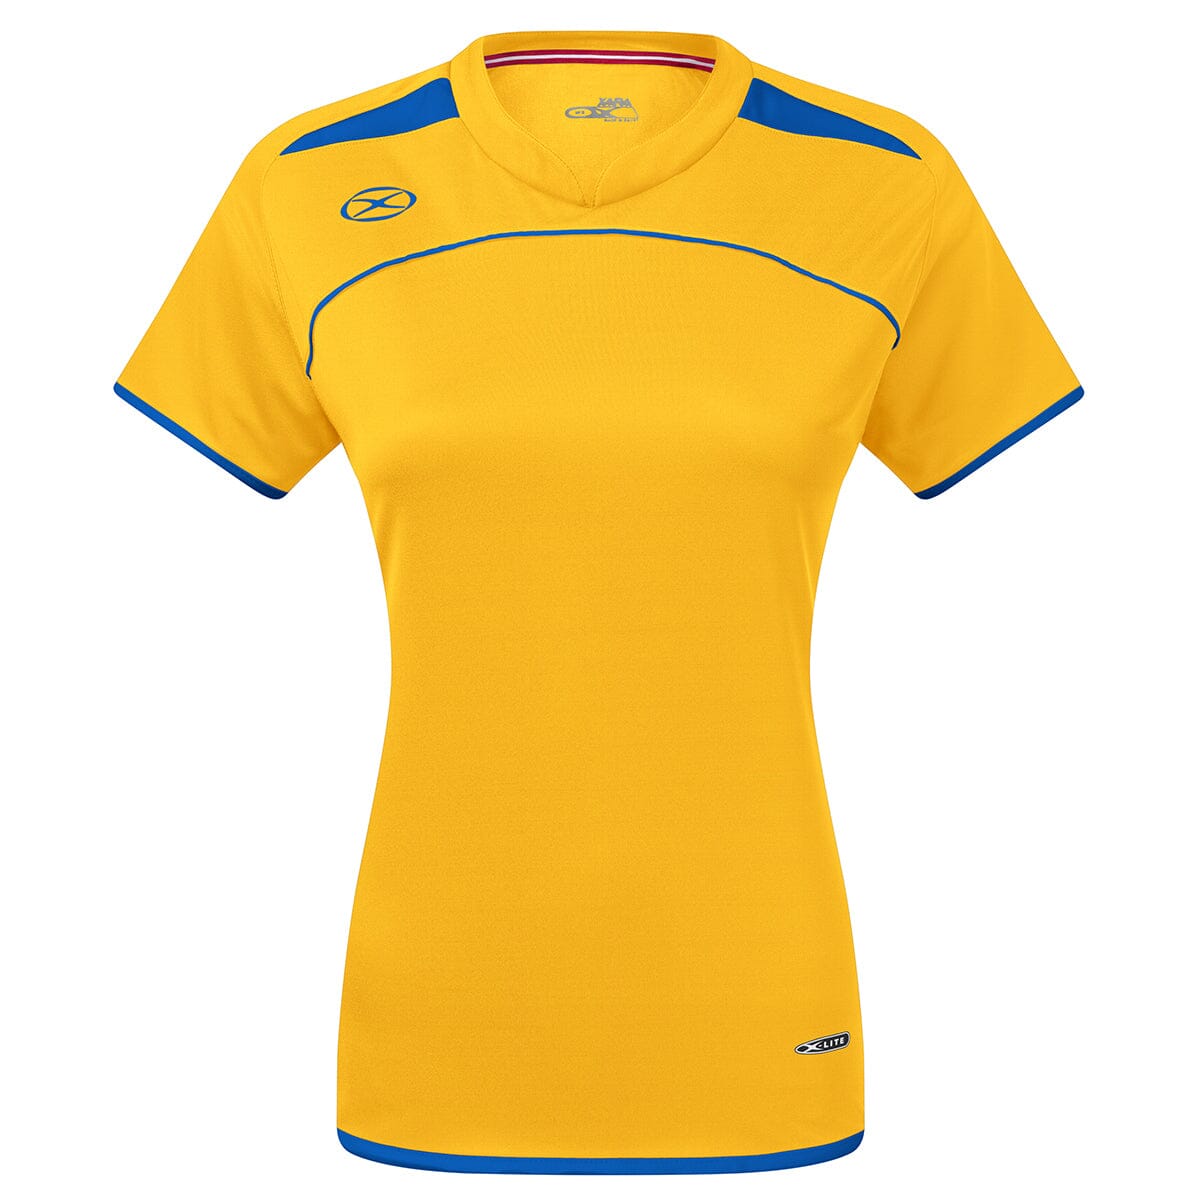 Cardiff Jersey - Female Shirt Xara Soccer Gold/Royal Womens Youth Large 